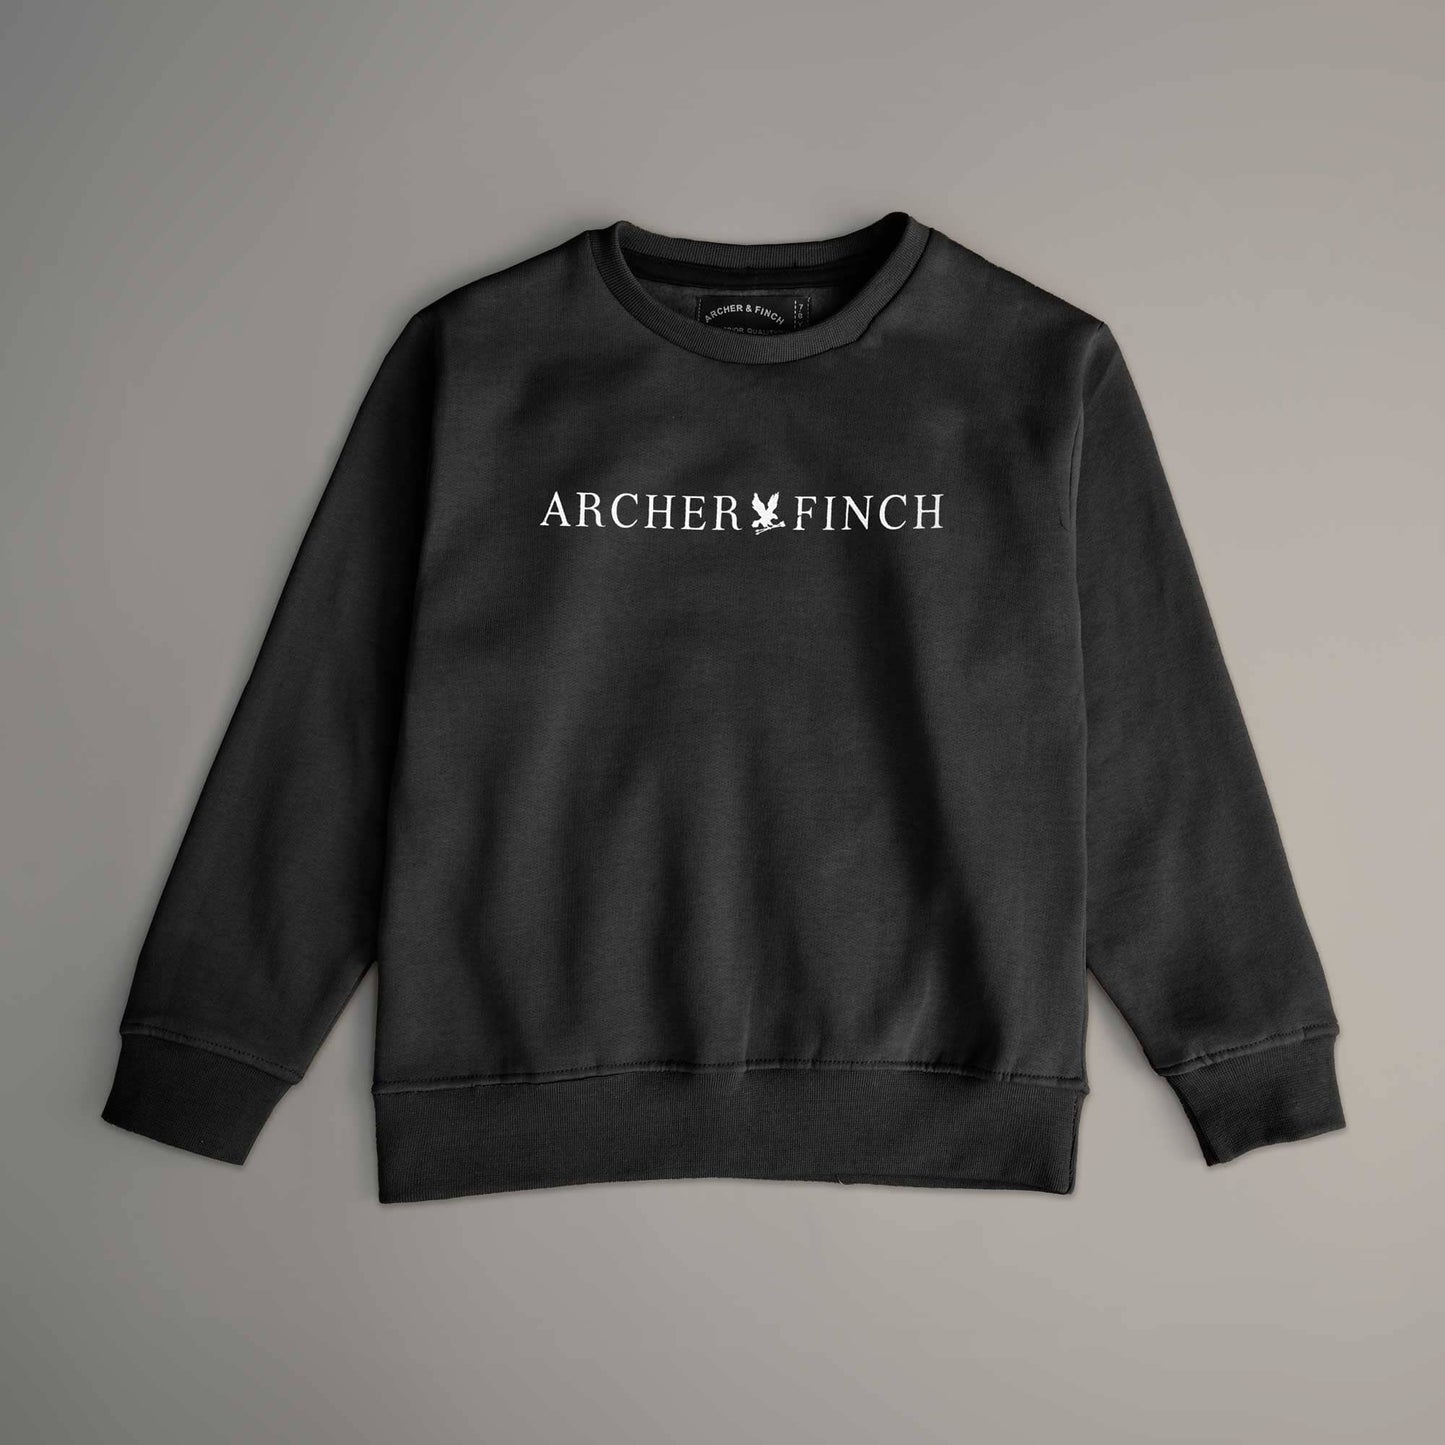 A&F Boy's Archer & Finch Printed Fleece Sweat Shirt Boy's Sweat Shirt LFS Black 3-4 Years 